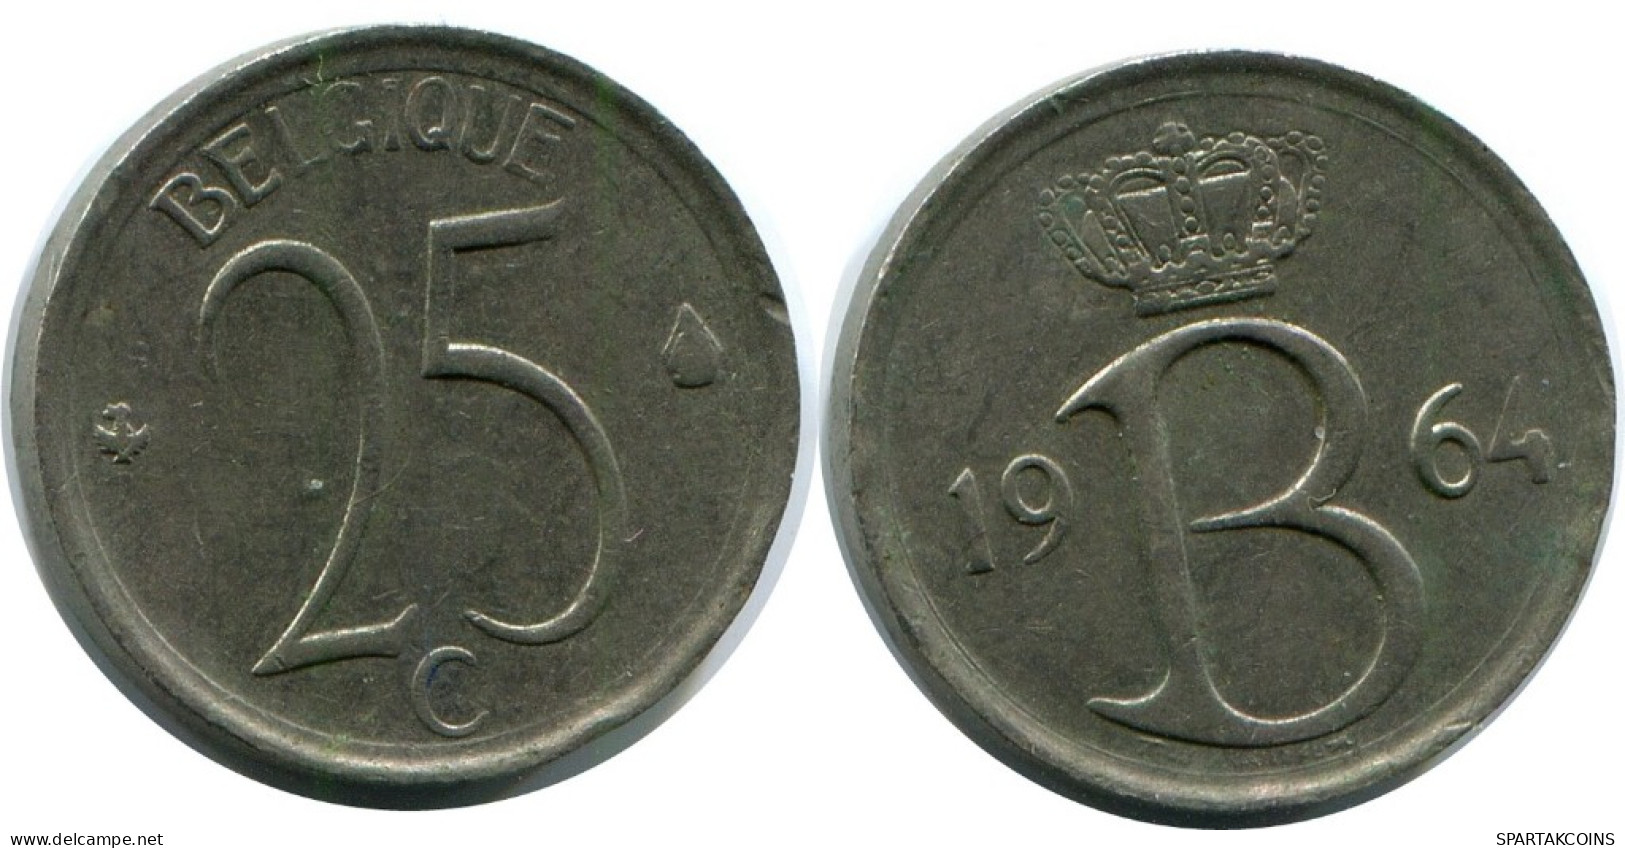 25 CENTIMES 1964 BELGIEN BELGIUM Münze #AH834.1.D.A - 25 Centimes